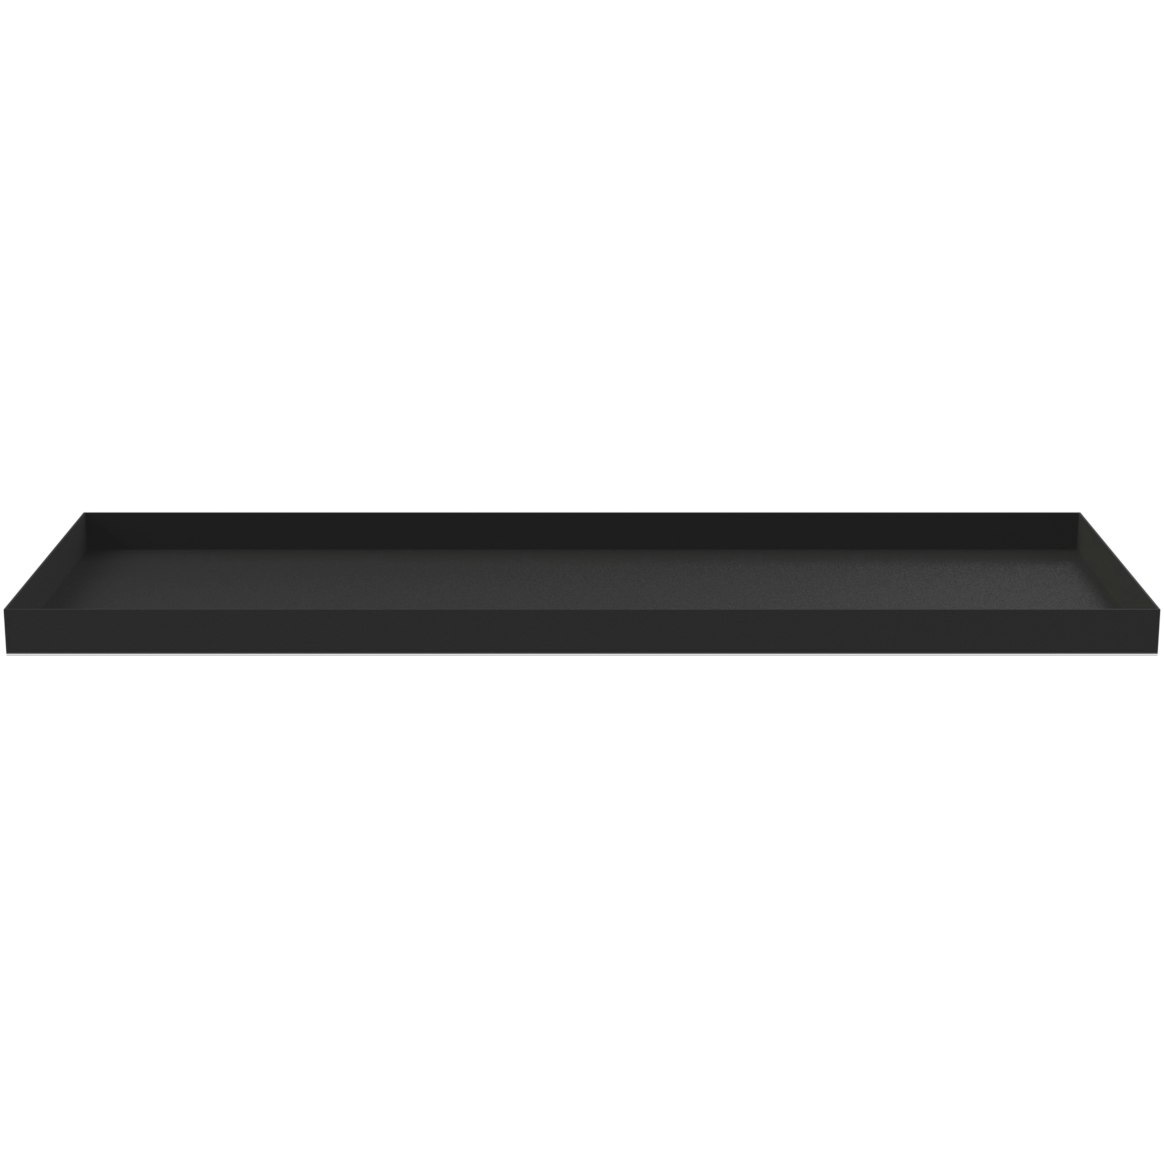 Tray 50x18 cm, Black